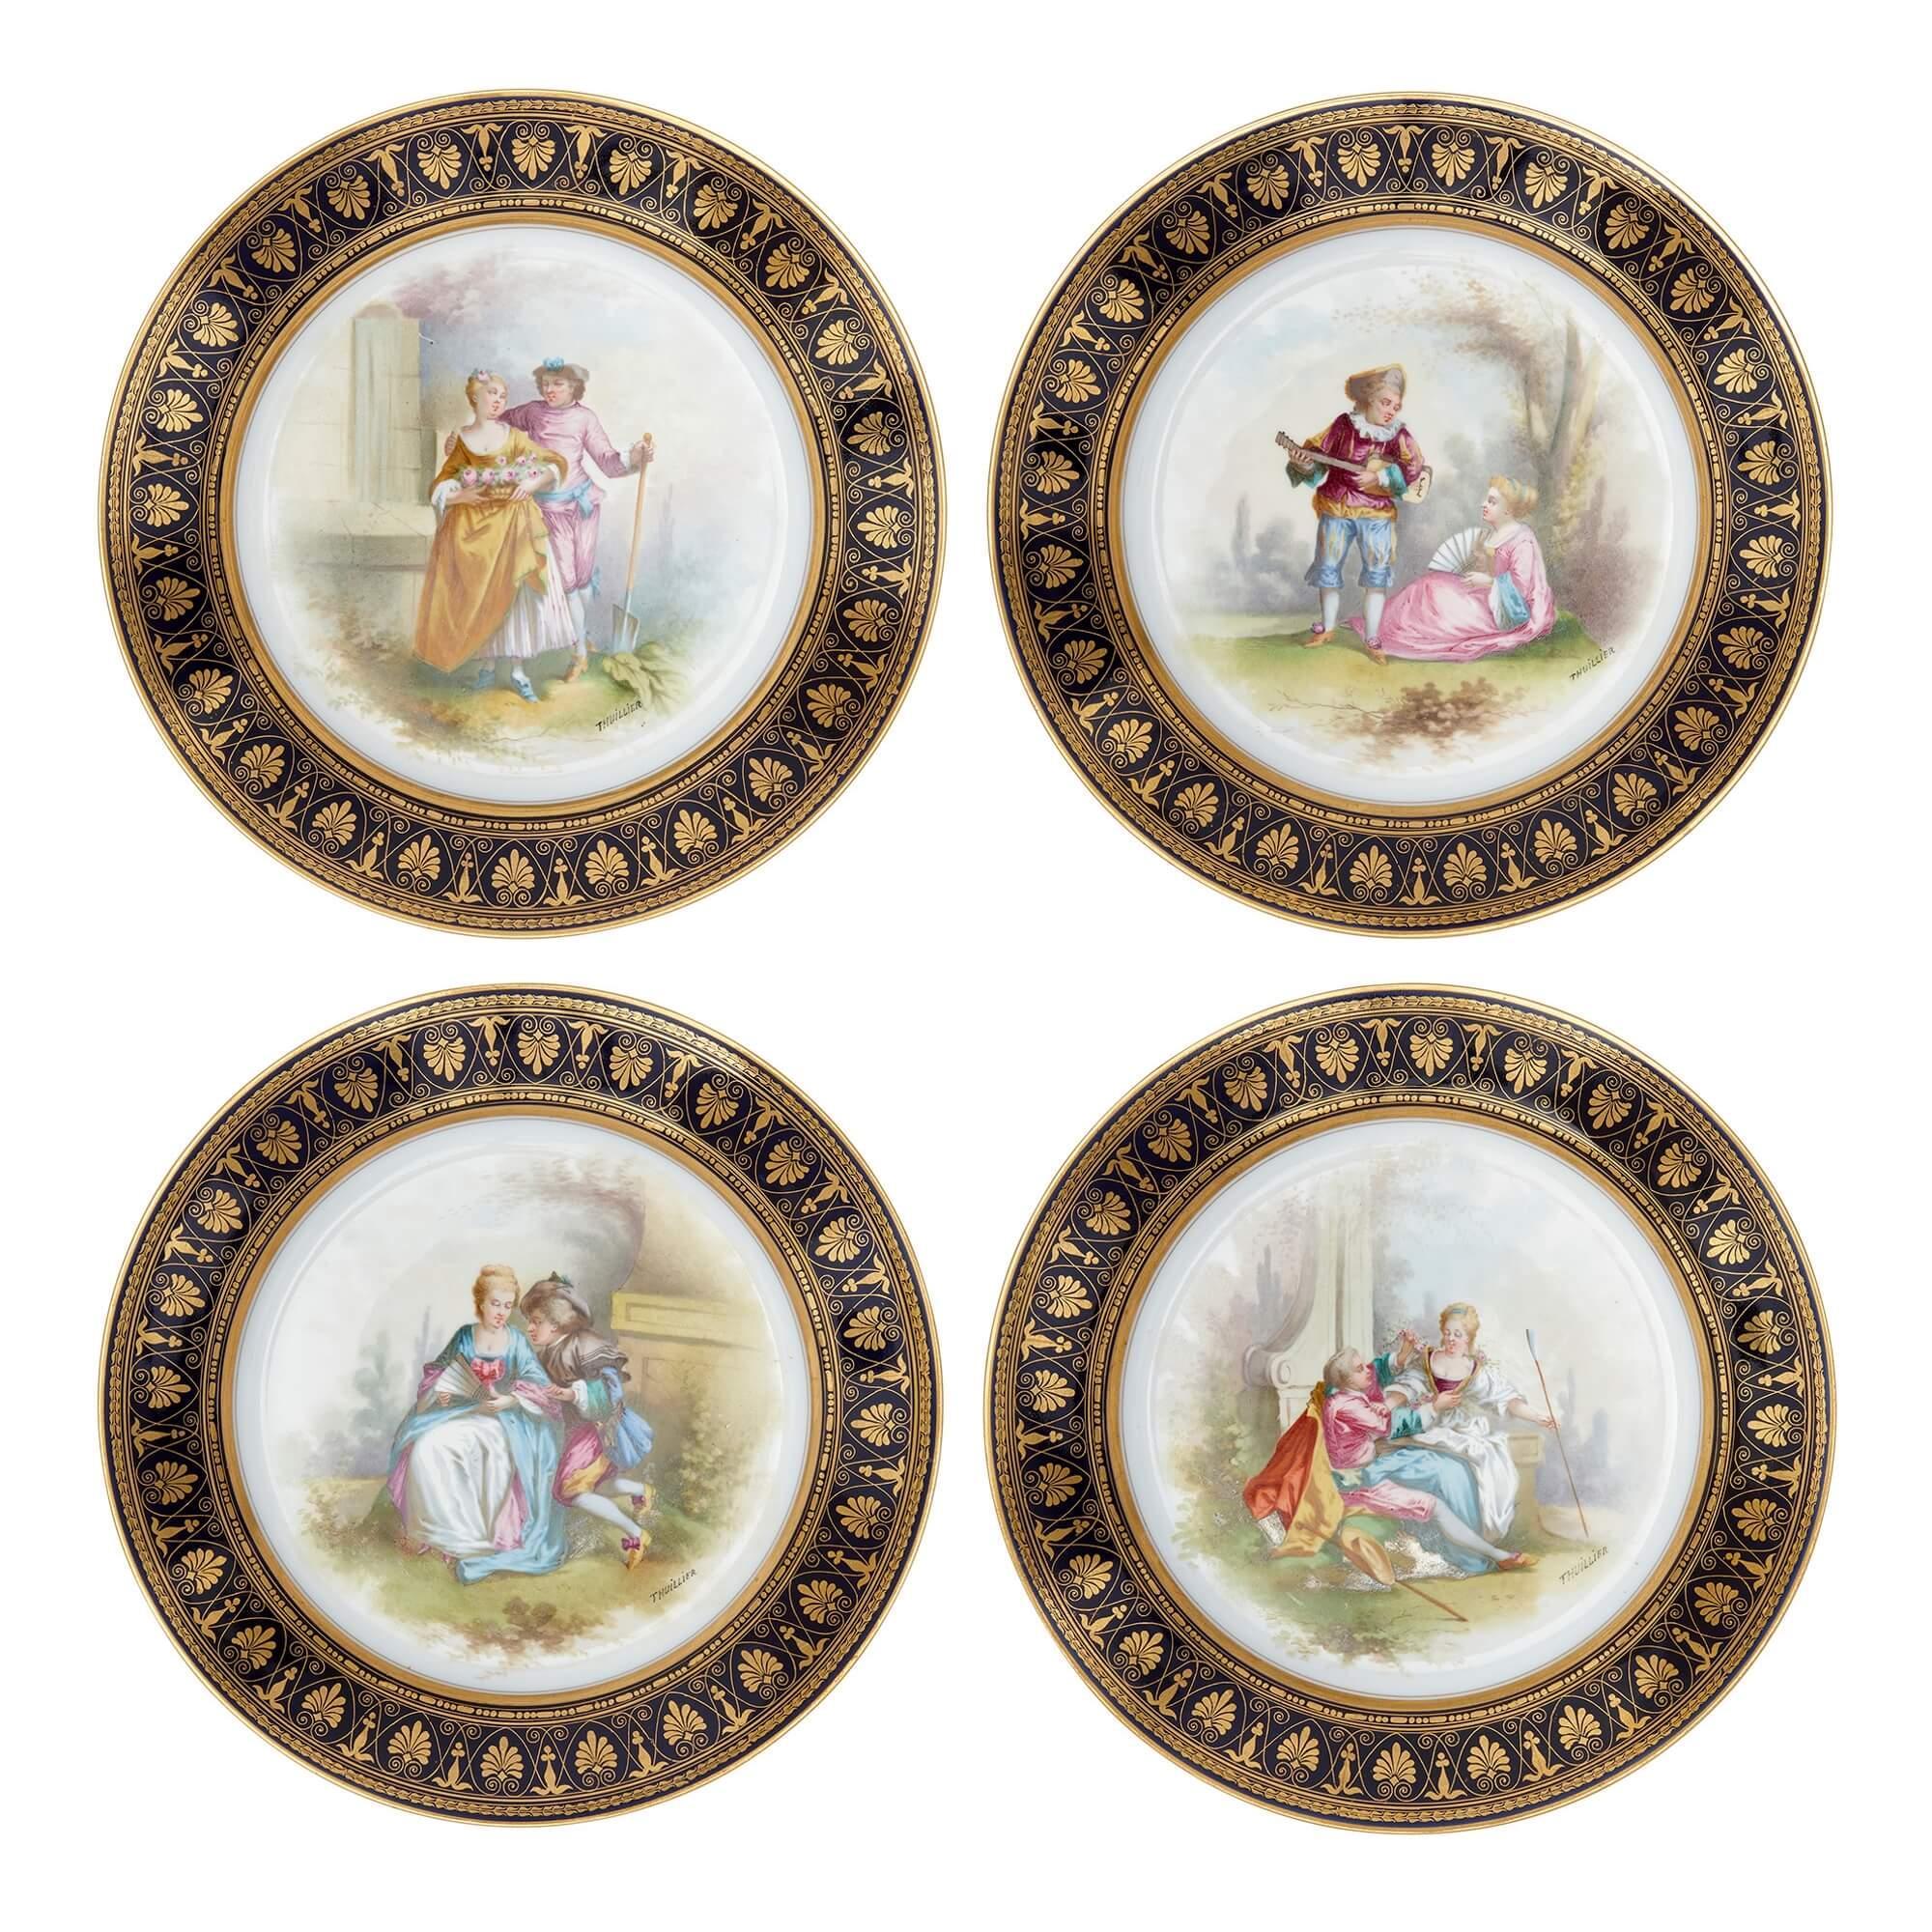 Set of 12 Sèvres porcelain plates with hand-painted pastoral scenes
French, c. 1864 
Plates: Height 3cm, diameter 23cm
Case: Height 10cm, width 76cm, depth 52cm

Originating from the 19th century, this exquisite set of twelve Sèvres porcelain plates